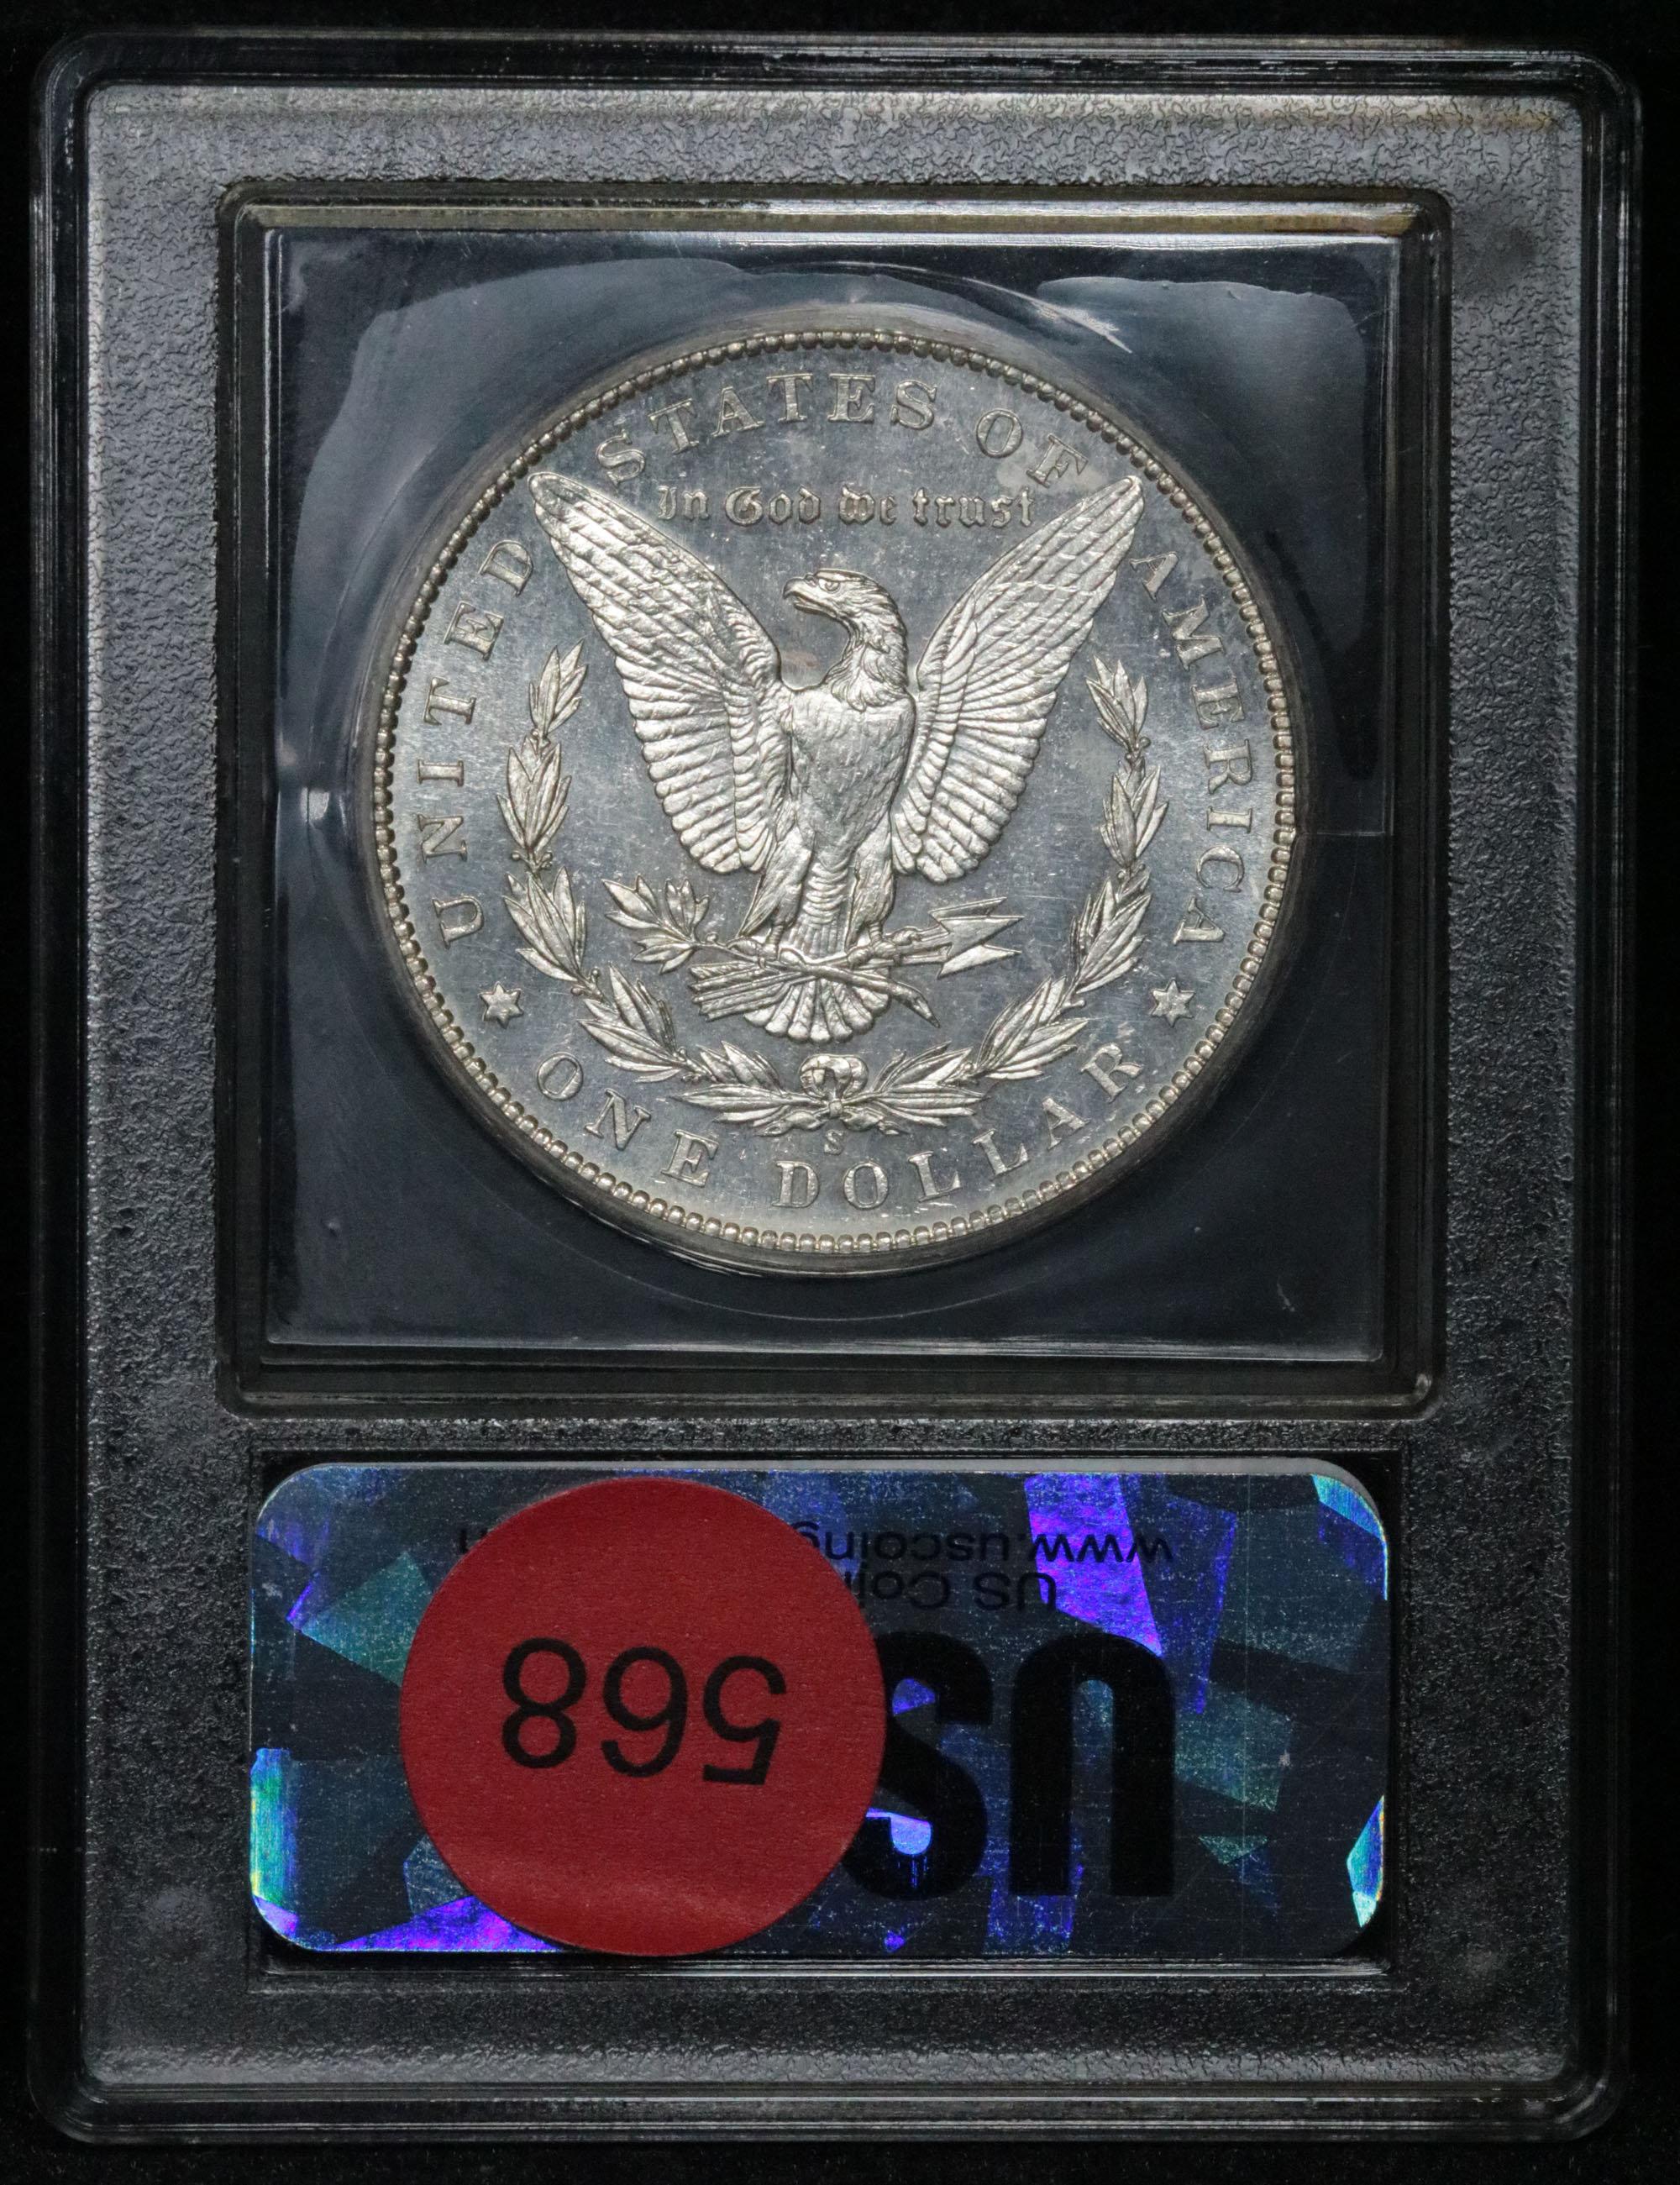 ***Auction Highlight*** 1900-s Morgan Dollar $1 Graded GEM Unc DMPL by USCG (fc)